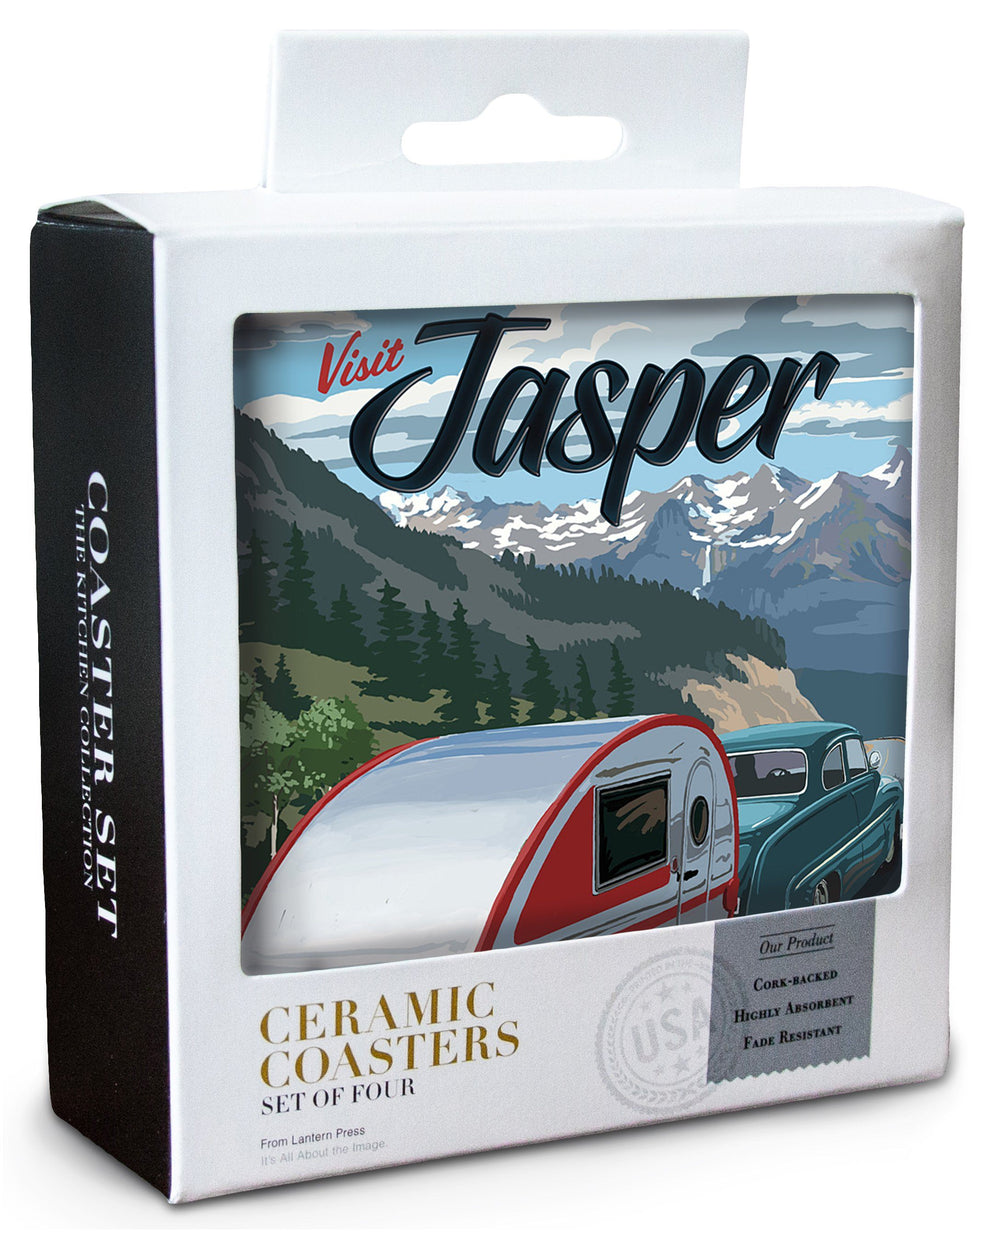 Jasper, Canada, Canadian Rockies, Retro Camper, Visit, Lantern Press Artwork, Coaster Set Coasters Lantern Press 